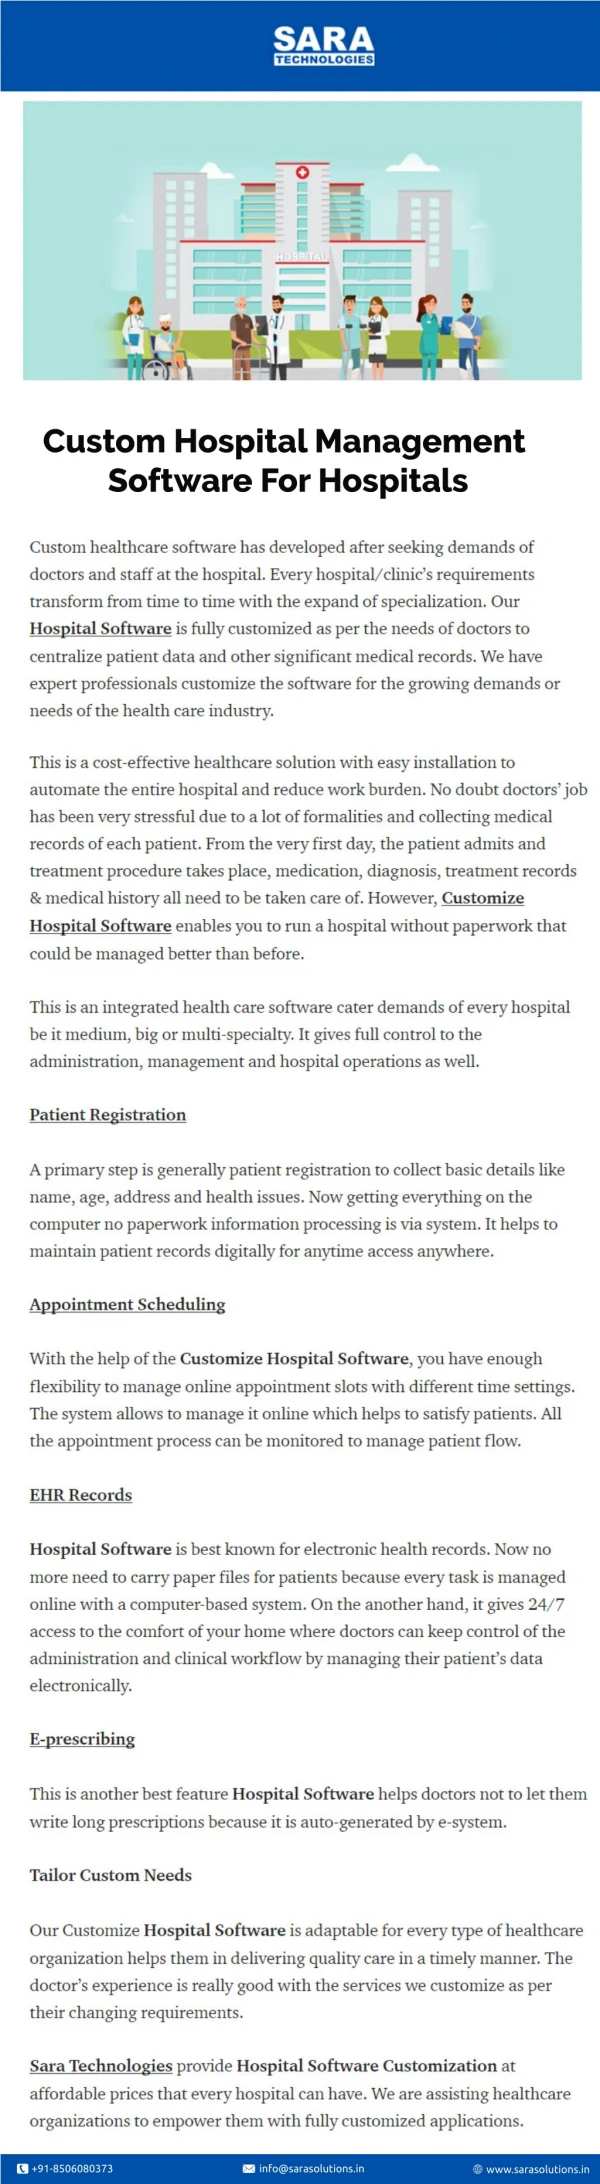 Custom Hospital Management Software For Hospitals